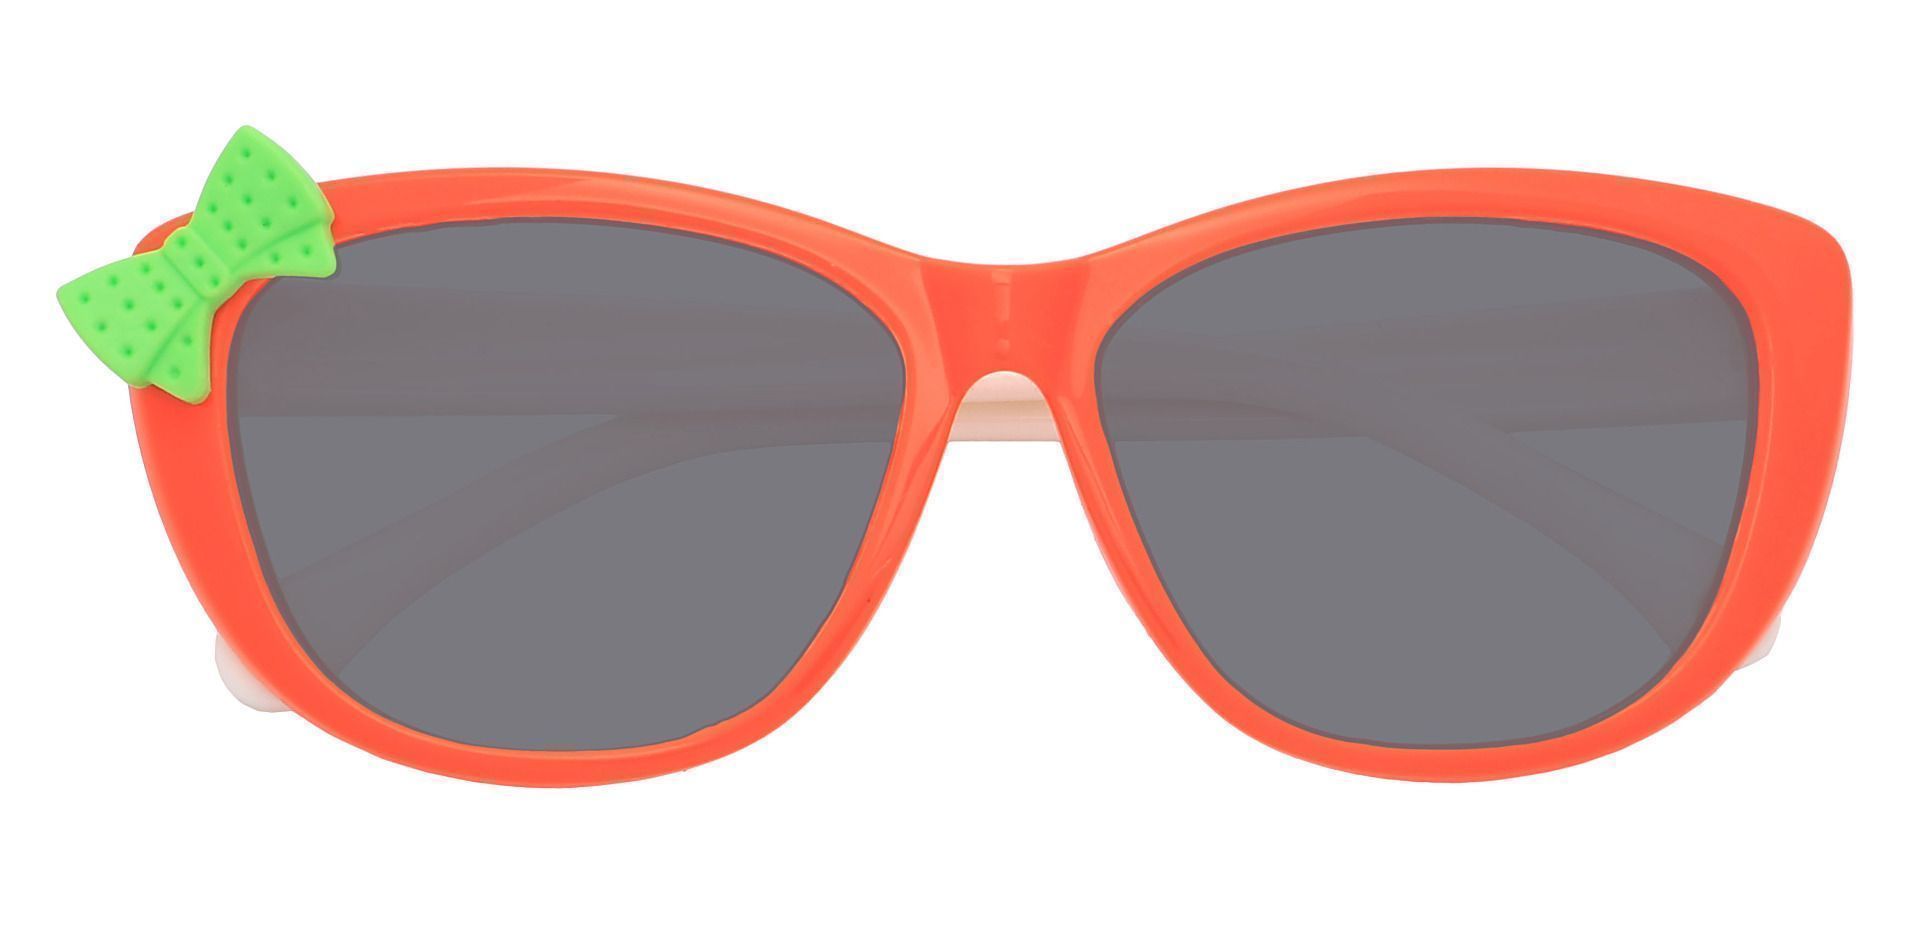 Mandarin Square Single Vision Sunglasses - Orange Frame With Gray Lenses